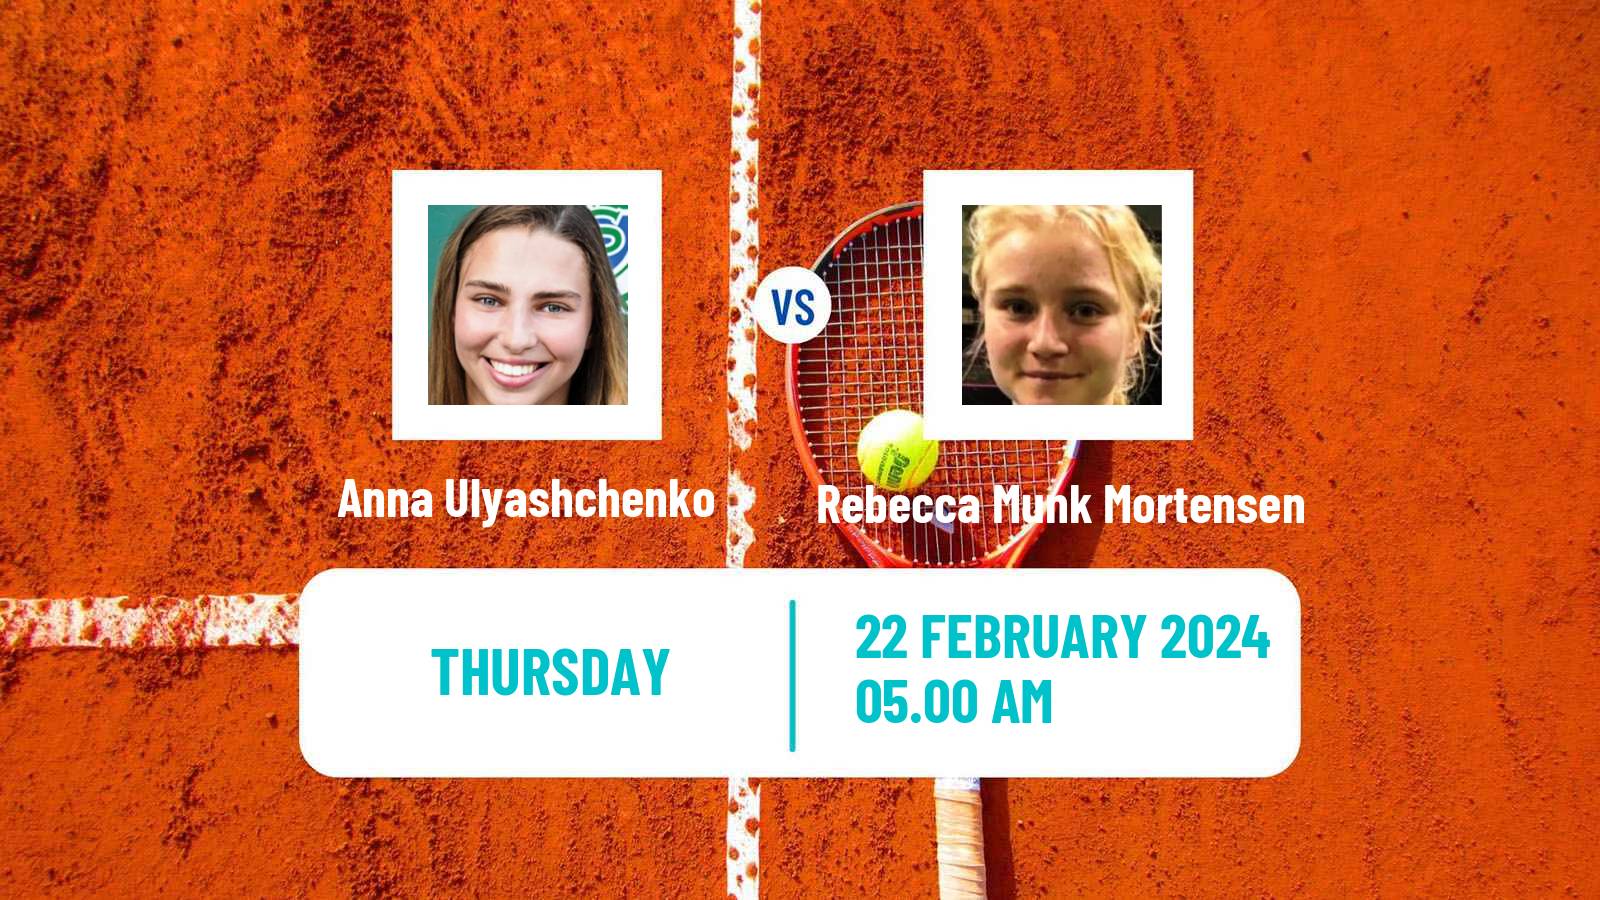 Tennis ITF W15 Manacor 2 Women Anna Ulyashchenko - Rebecca Munk Mortensen